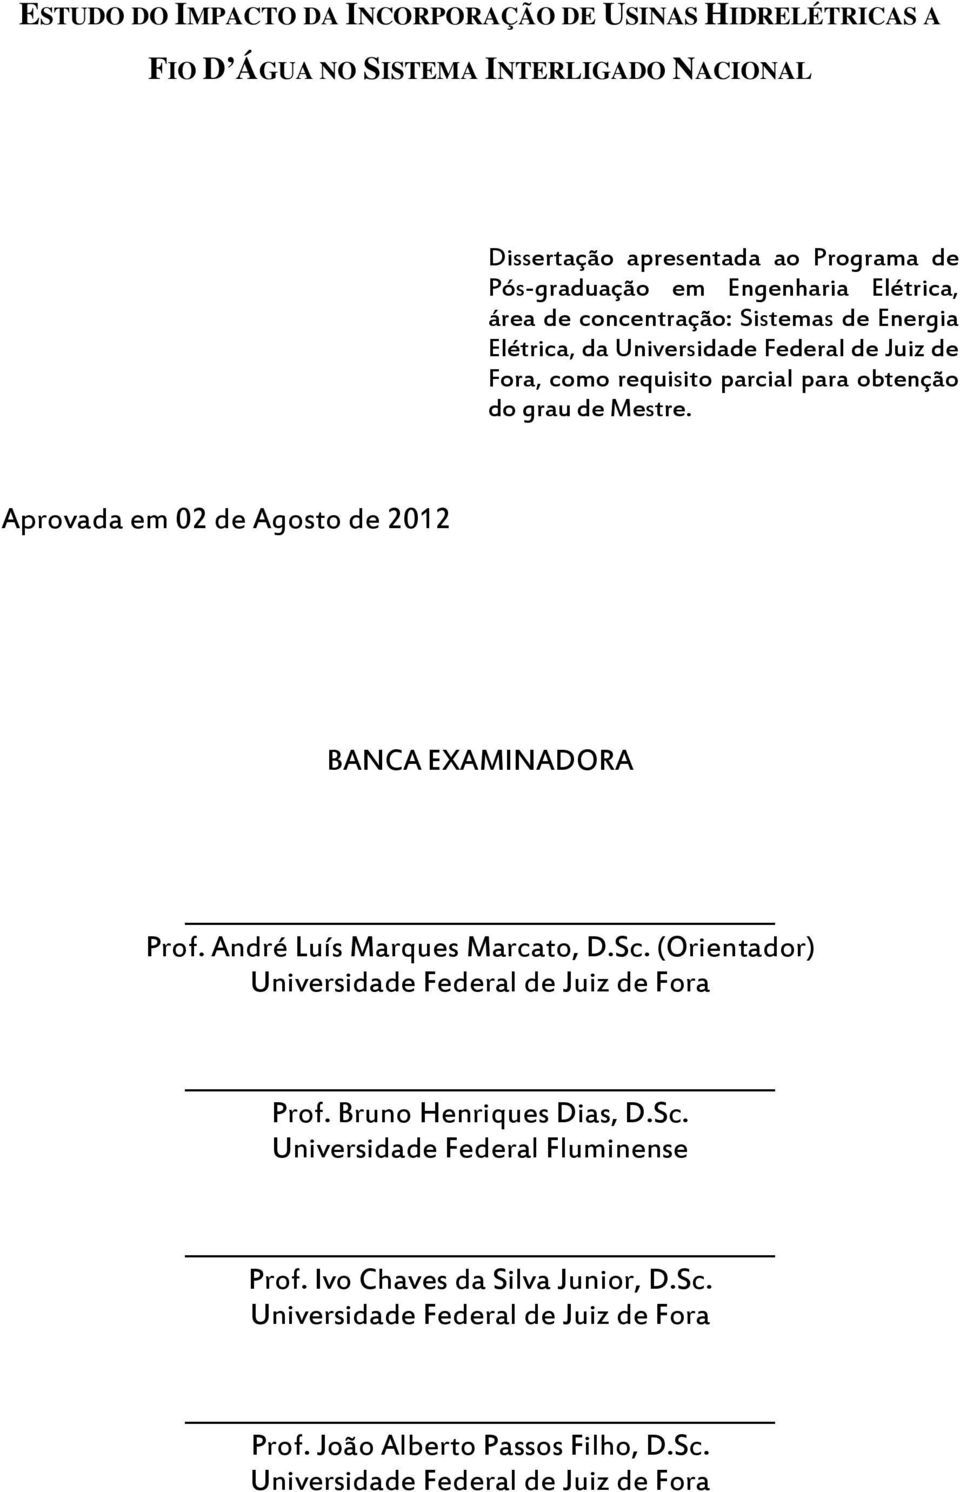 Aprovada em 02 de Agosto de 2012 BANCA EXAMINADORA Prof. André Luís Marques Marcato, D.Sc. (Orientador) Universidade Federal de Juiz de Fora Prof. Bruno Henriques Dias, D.